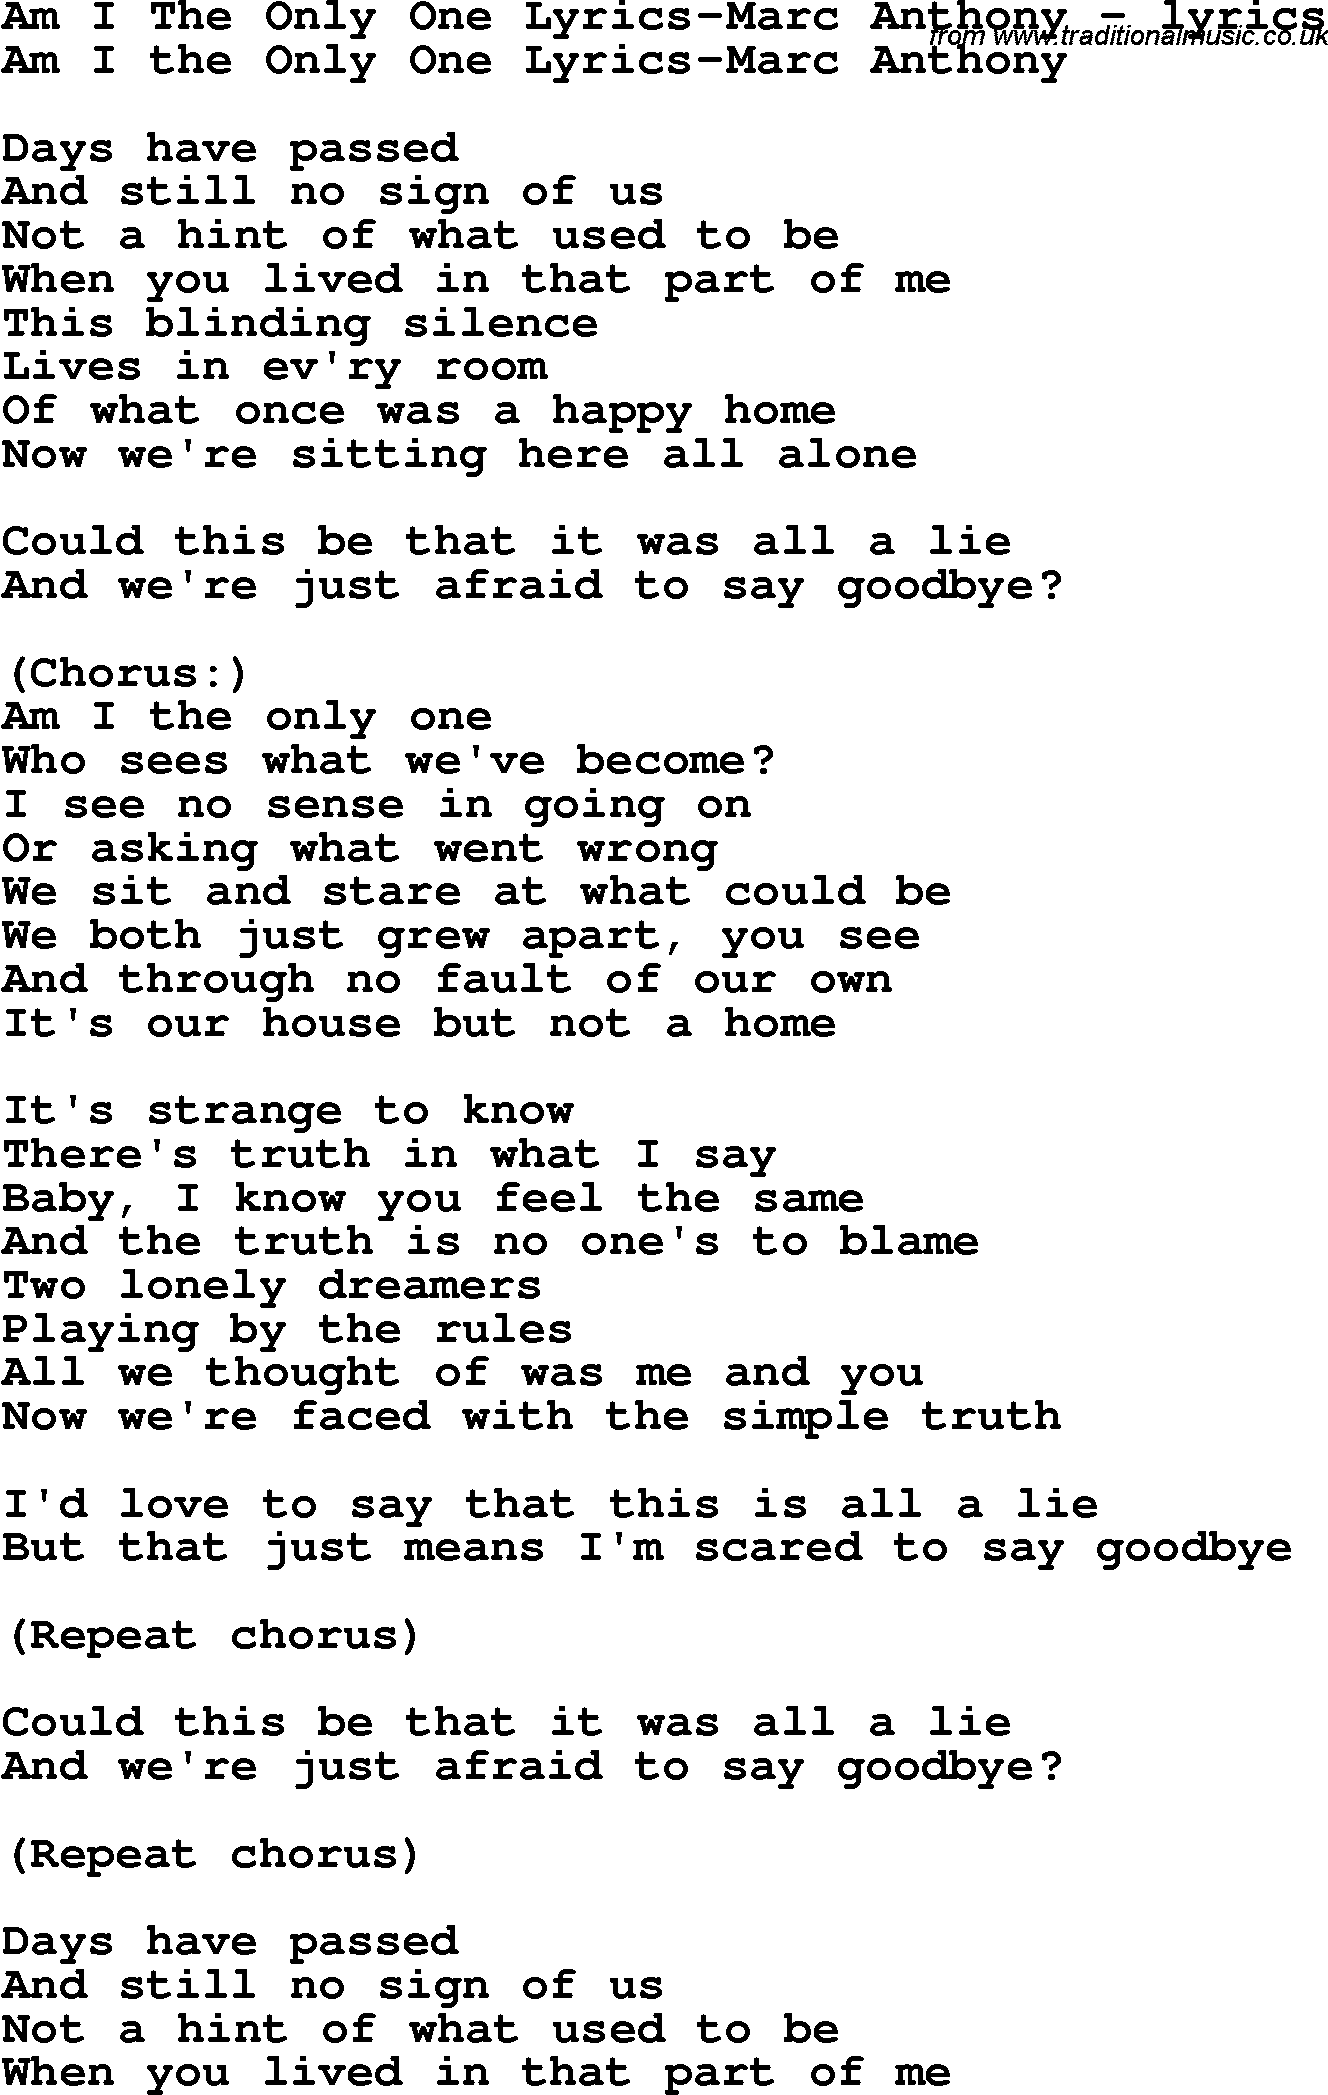 Love Song Lyrics for:Am I The Only One Lyrics-Marc Anthony